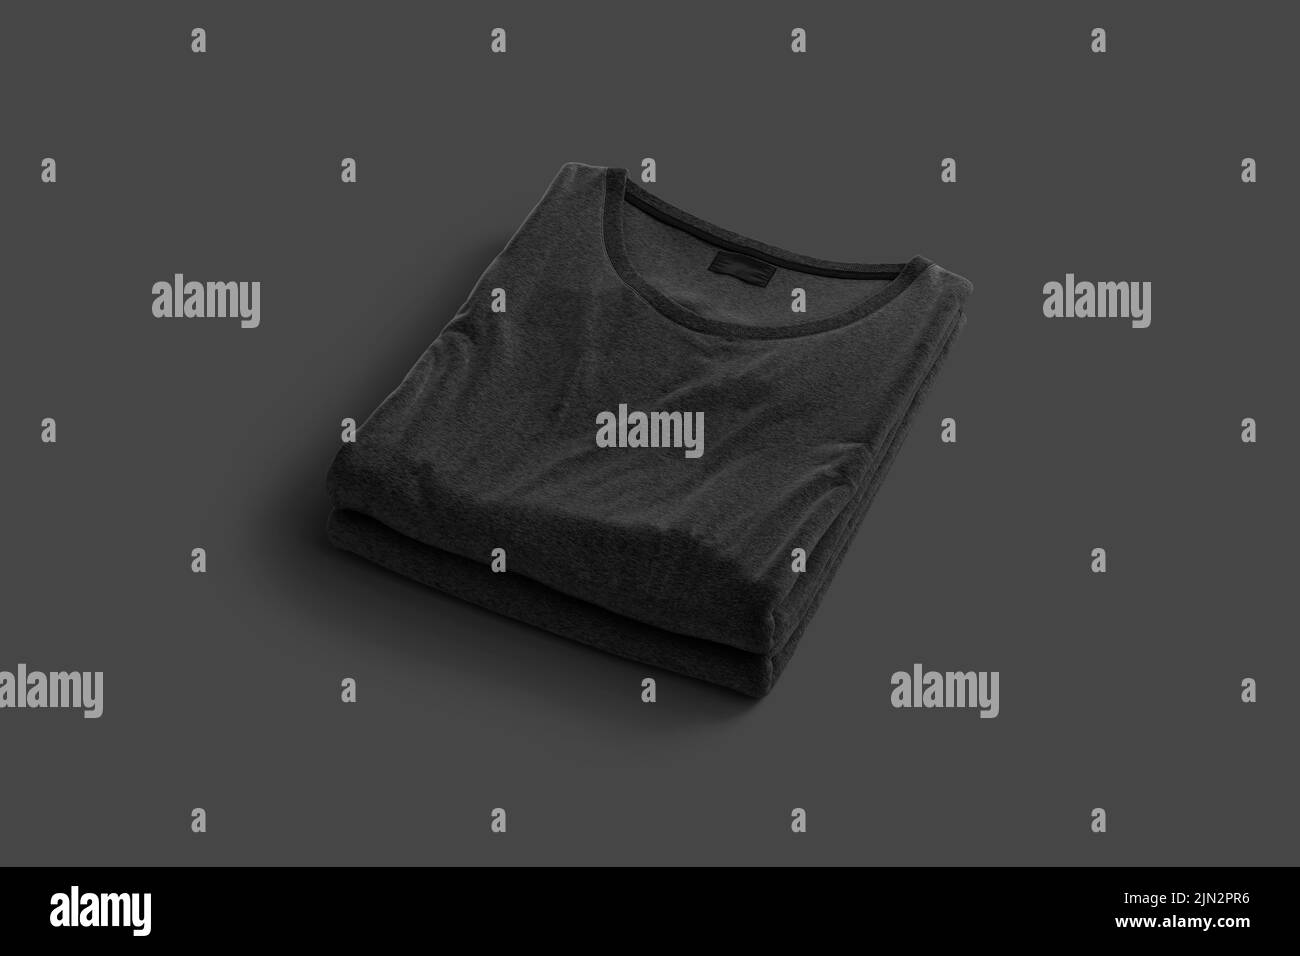 Blank black folded square t-shirt mockup stack, dark background Stock Photo